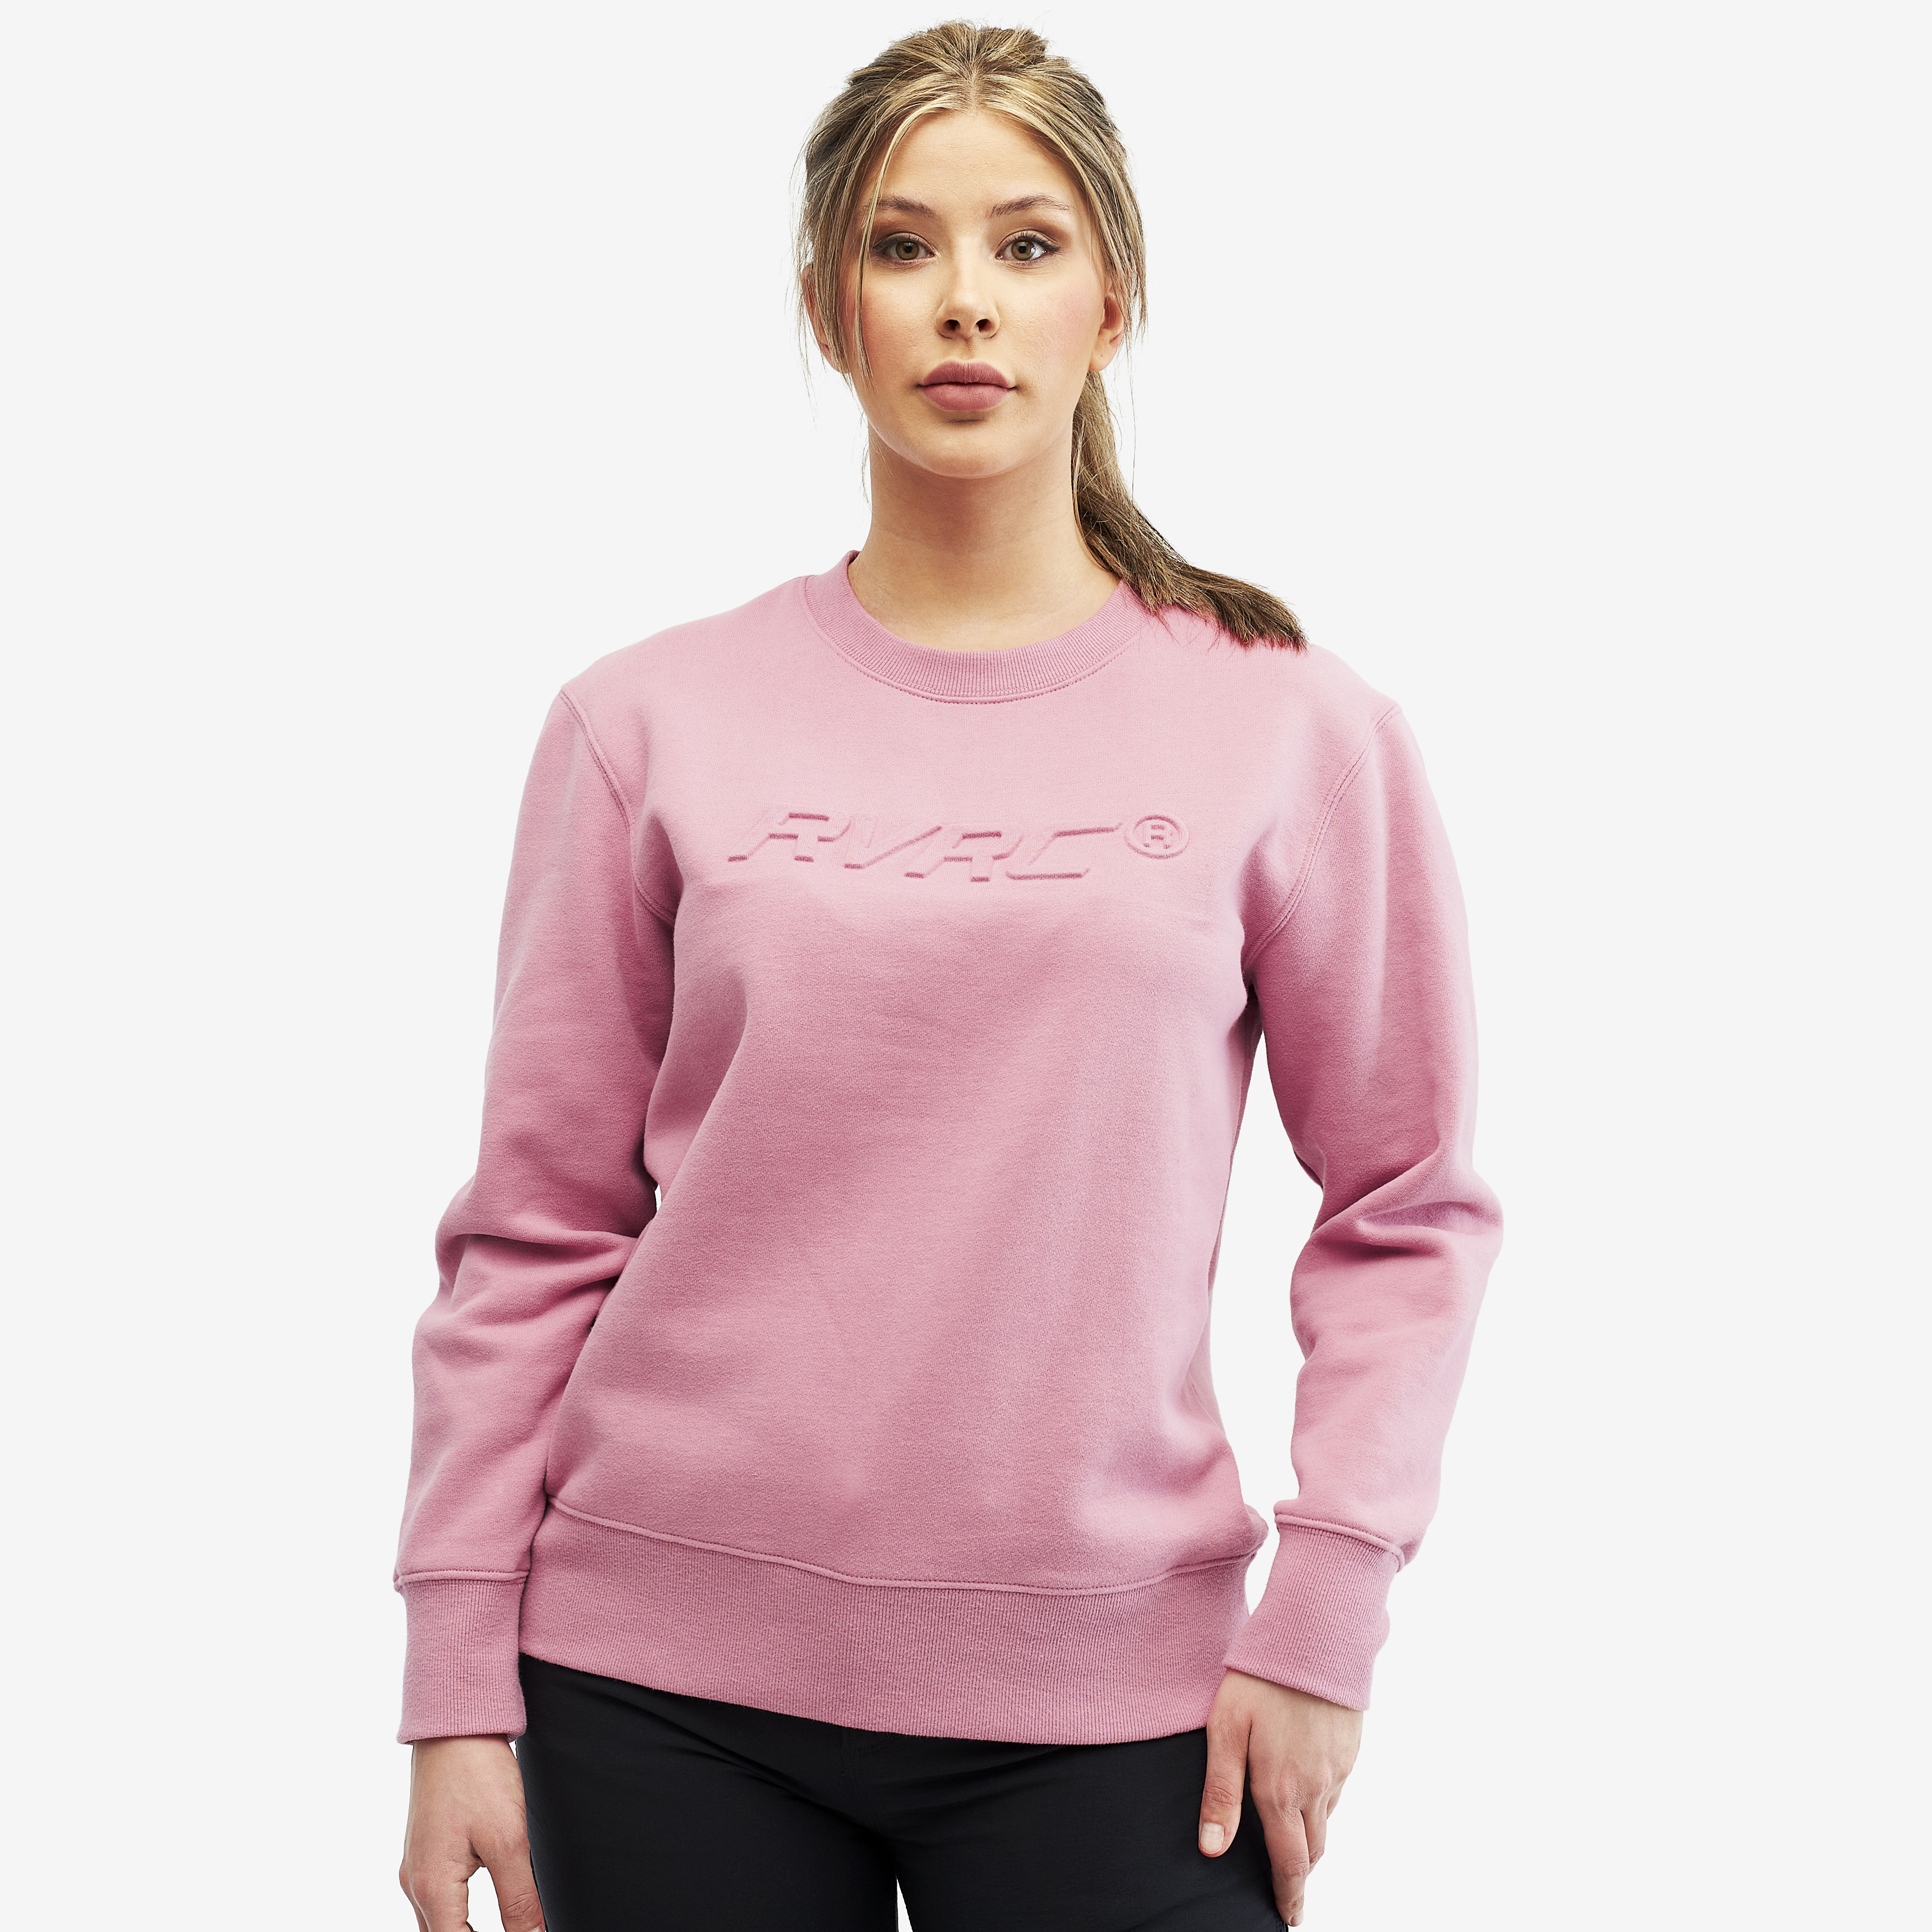 Slacker Sweater Foxglove Women